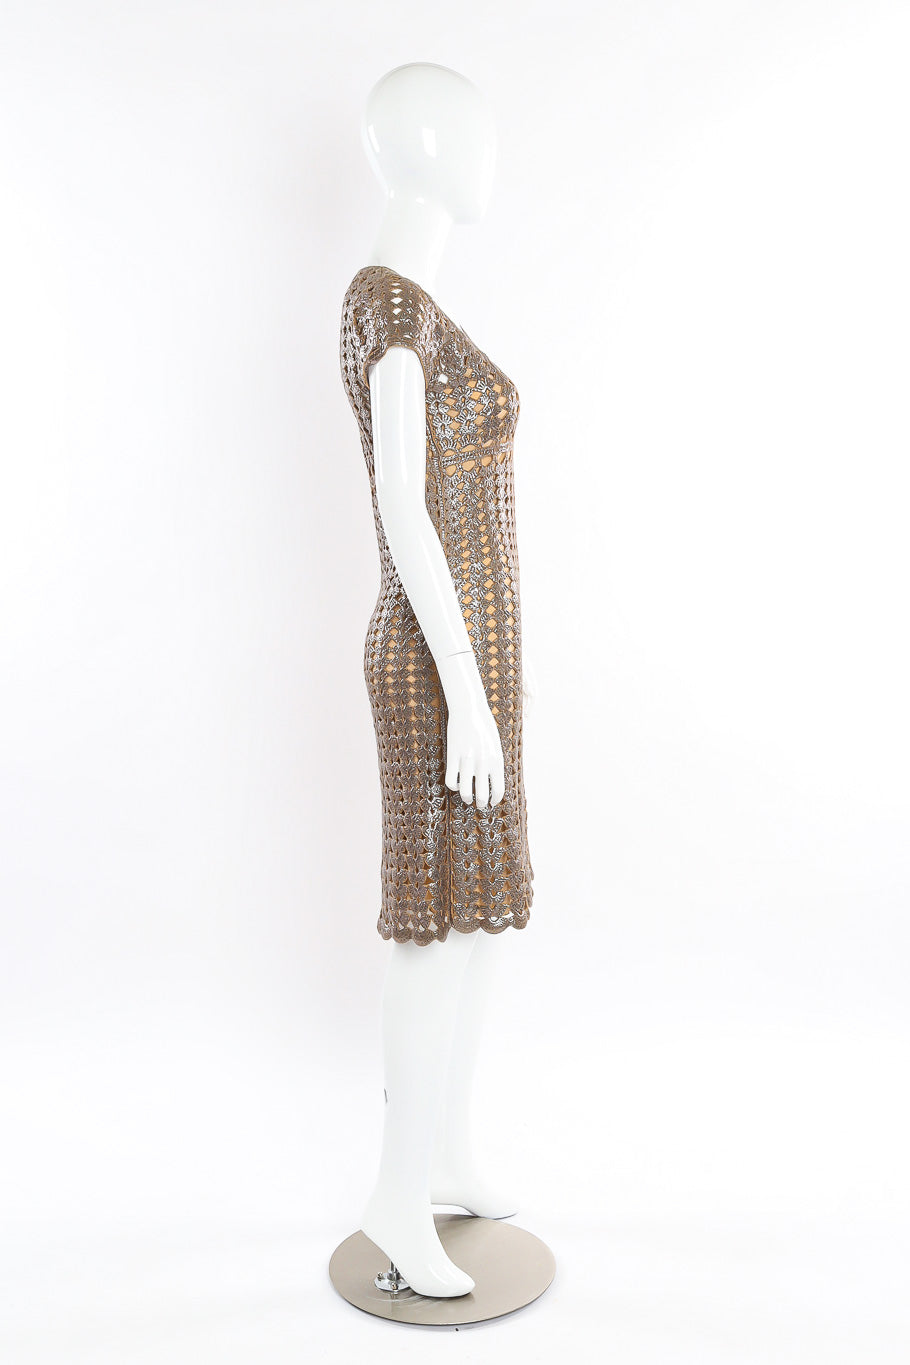 Metallic crochet knitted cocktail dress by Prada Photo Side View. @recessla